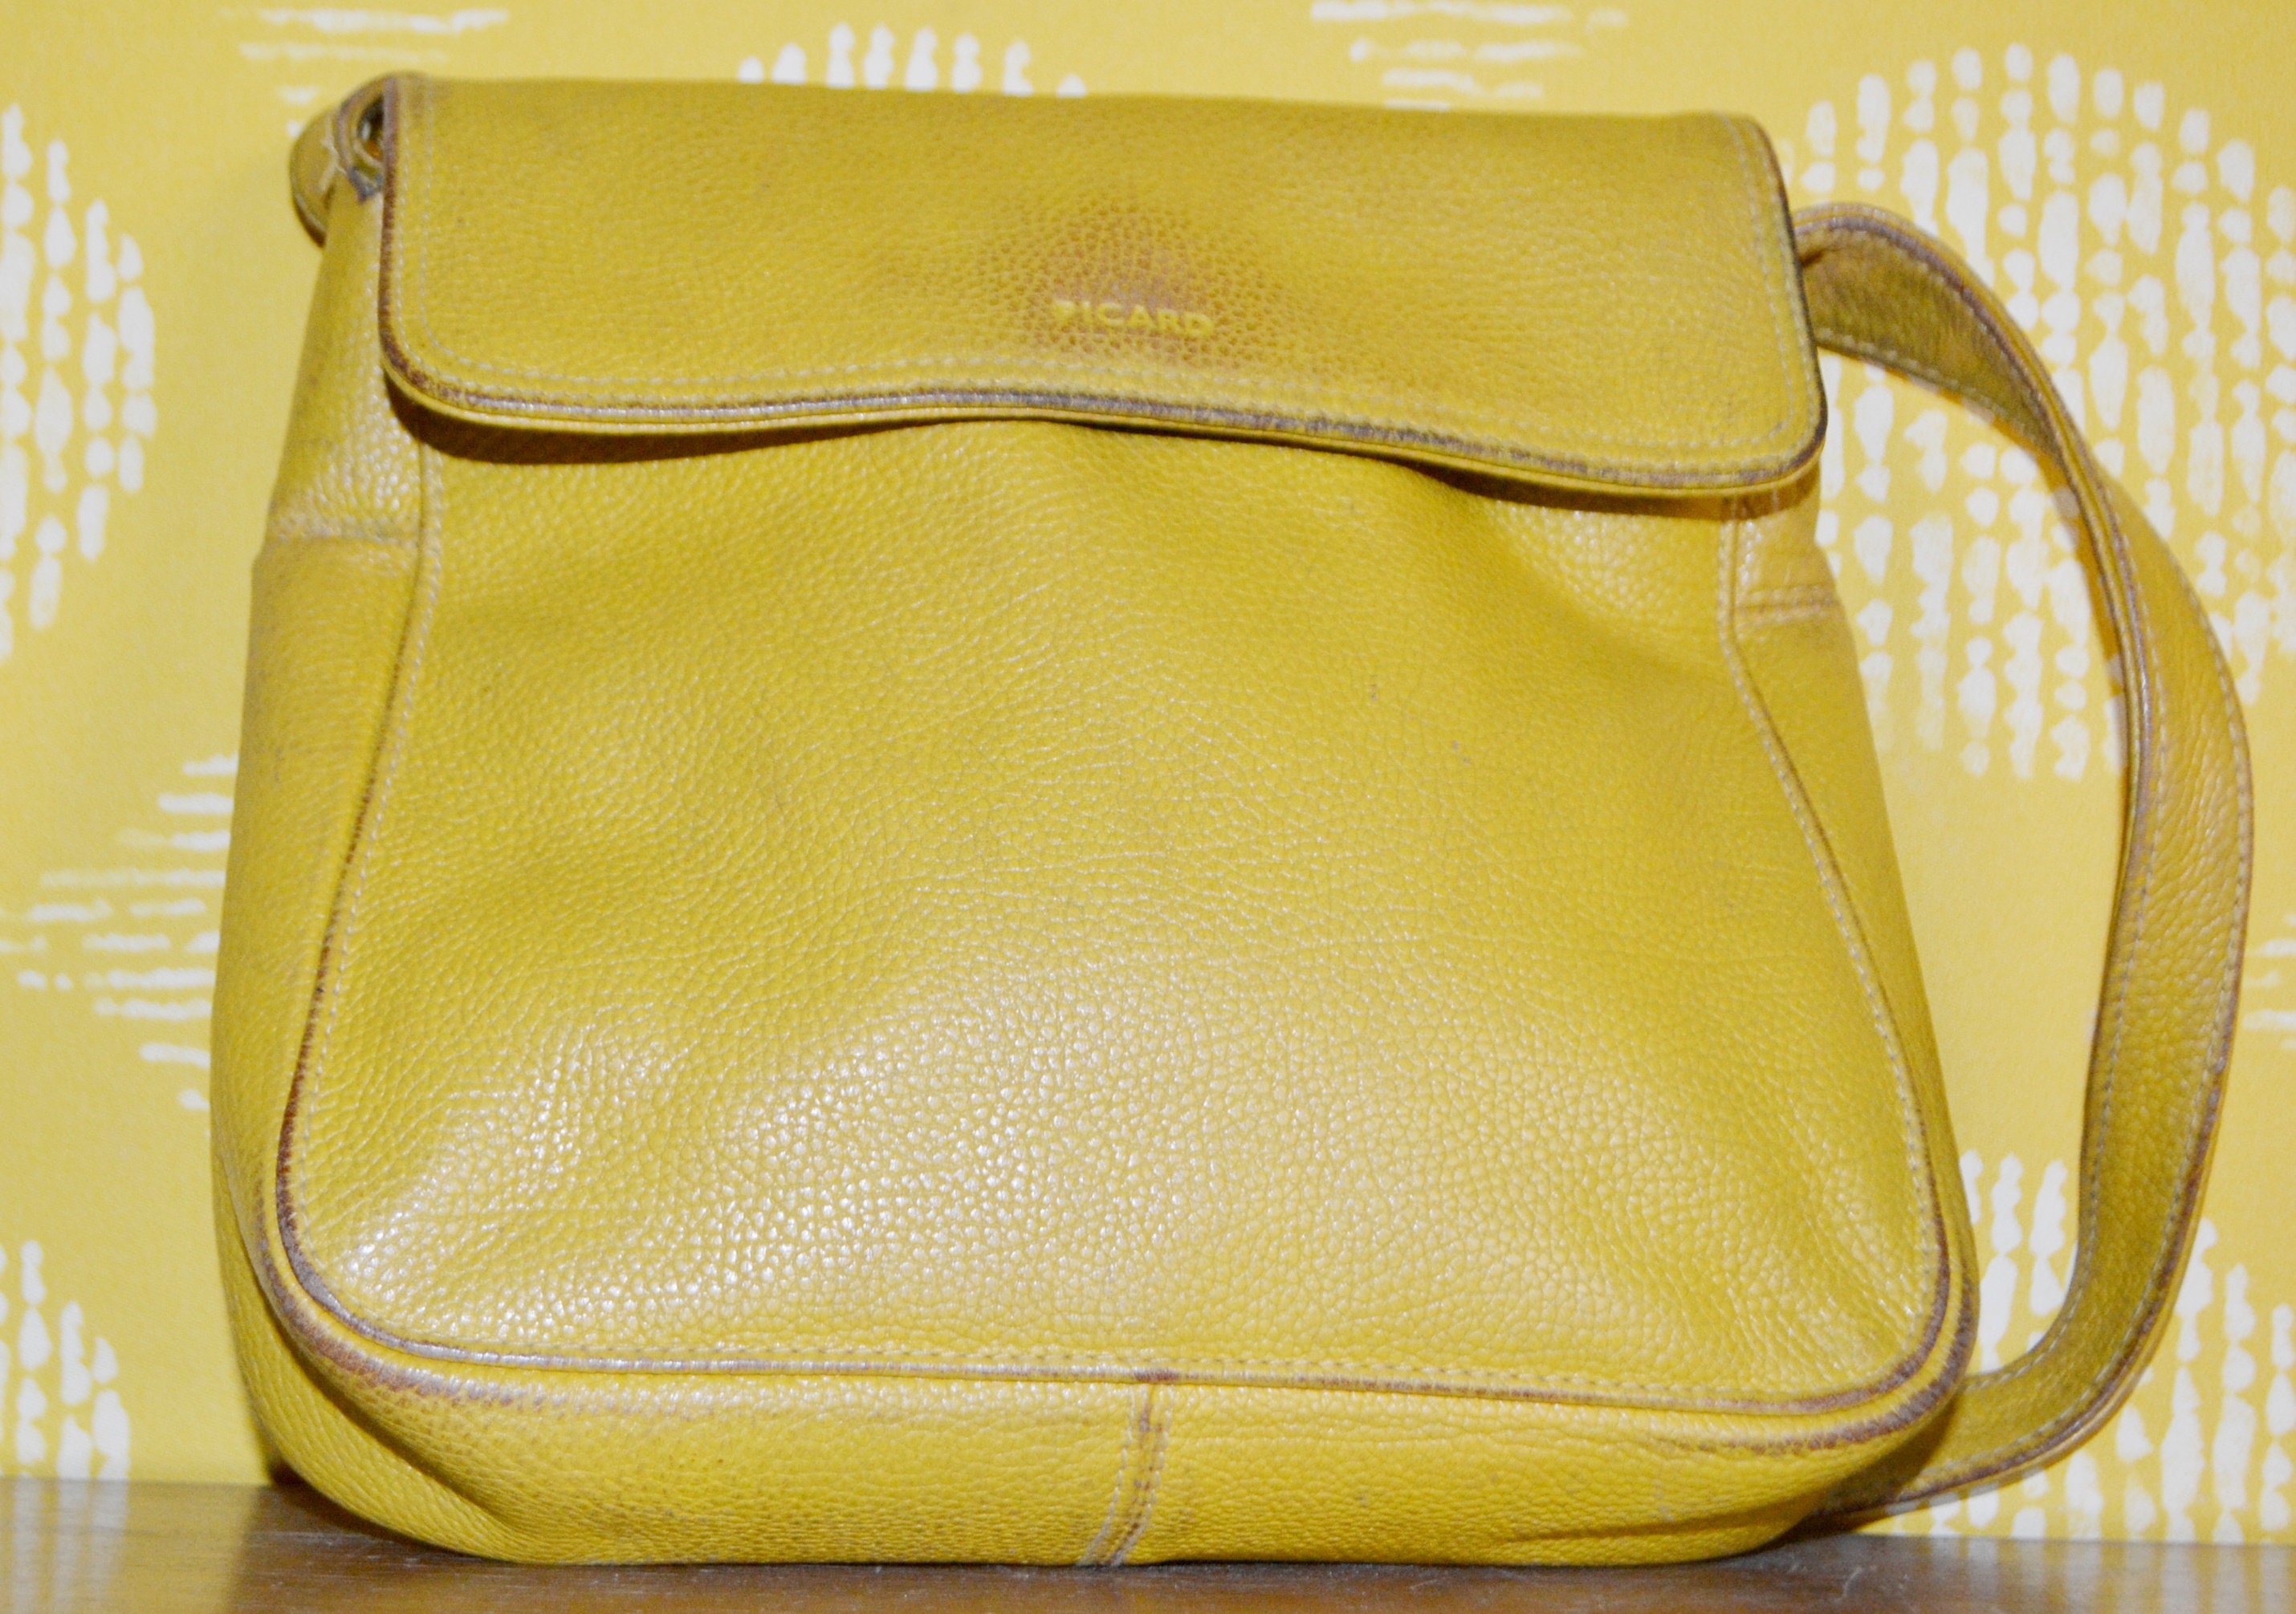 Picard Ladies Handbag Leather Bag Shoulder Bag Evening Bag Small Bag New